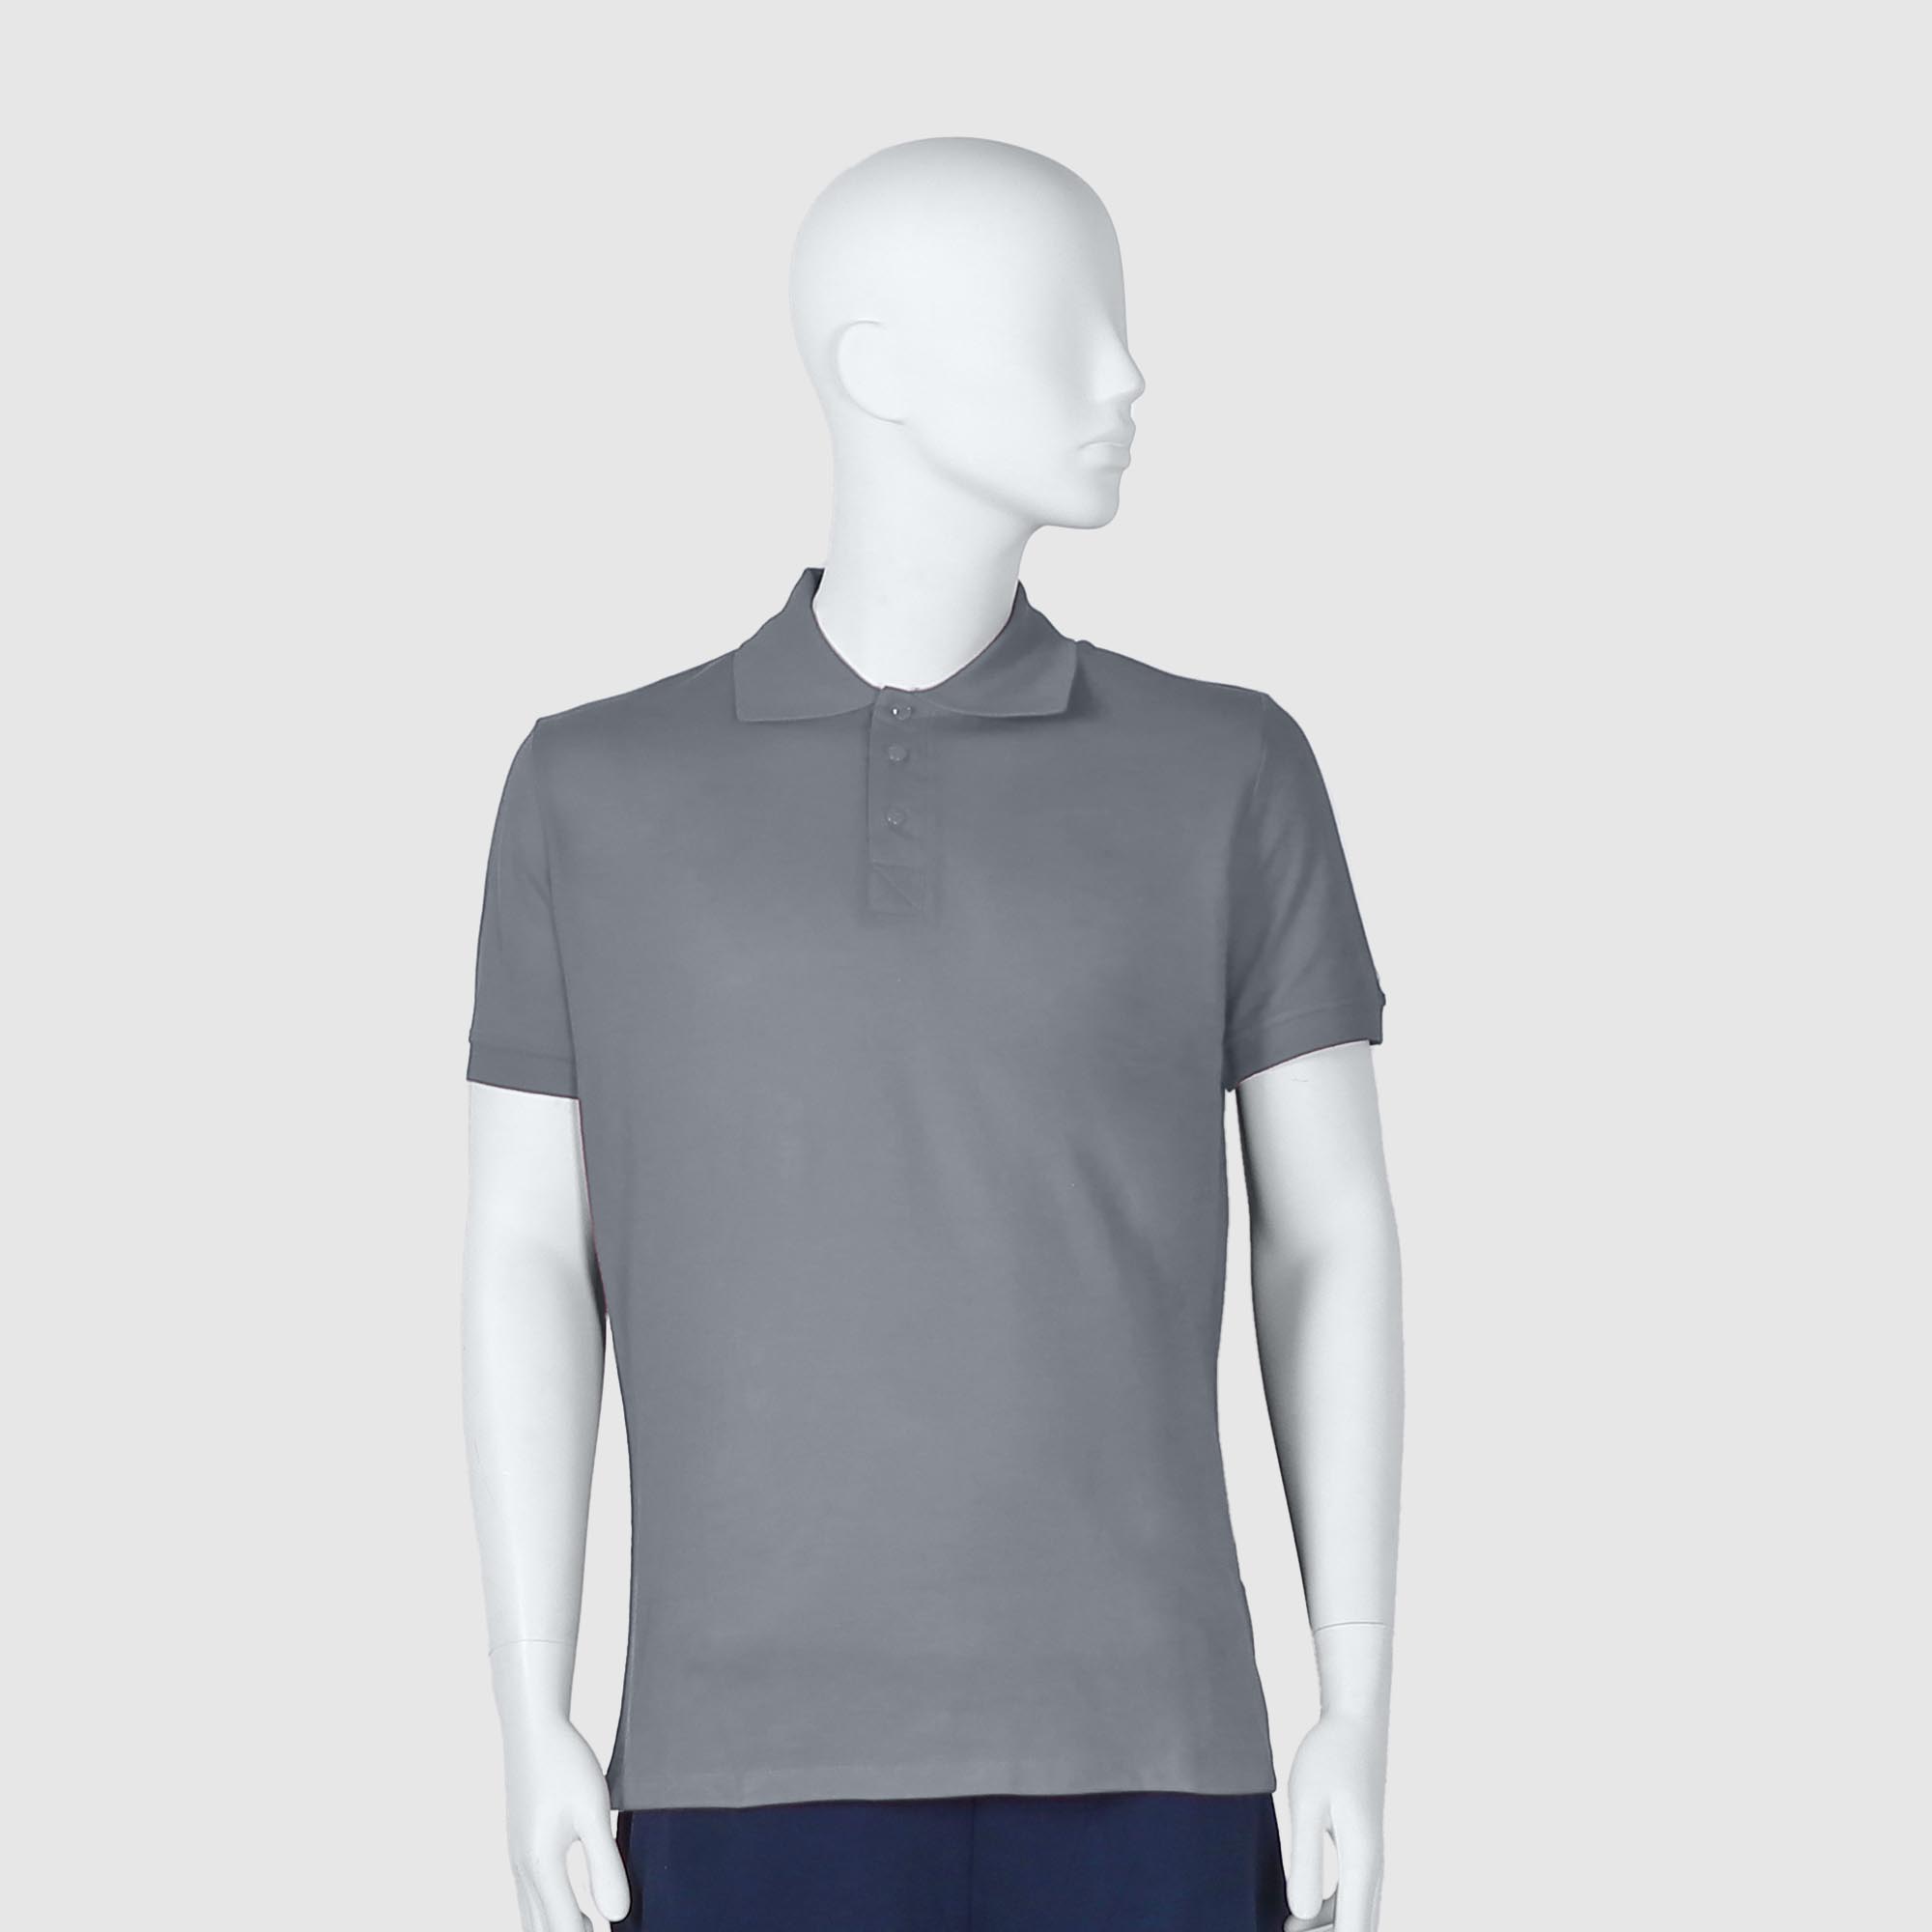 Мужская футболка-поло Diva Teks серая (DTD-11), цвет серый, размер 46-48